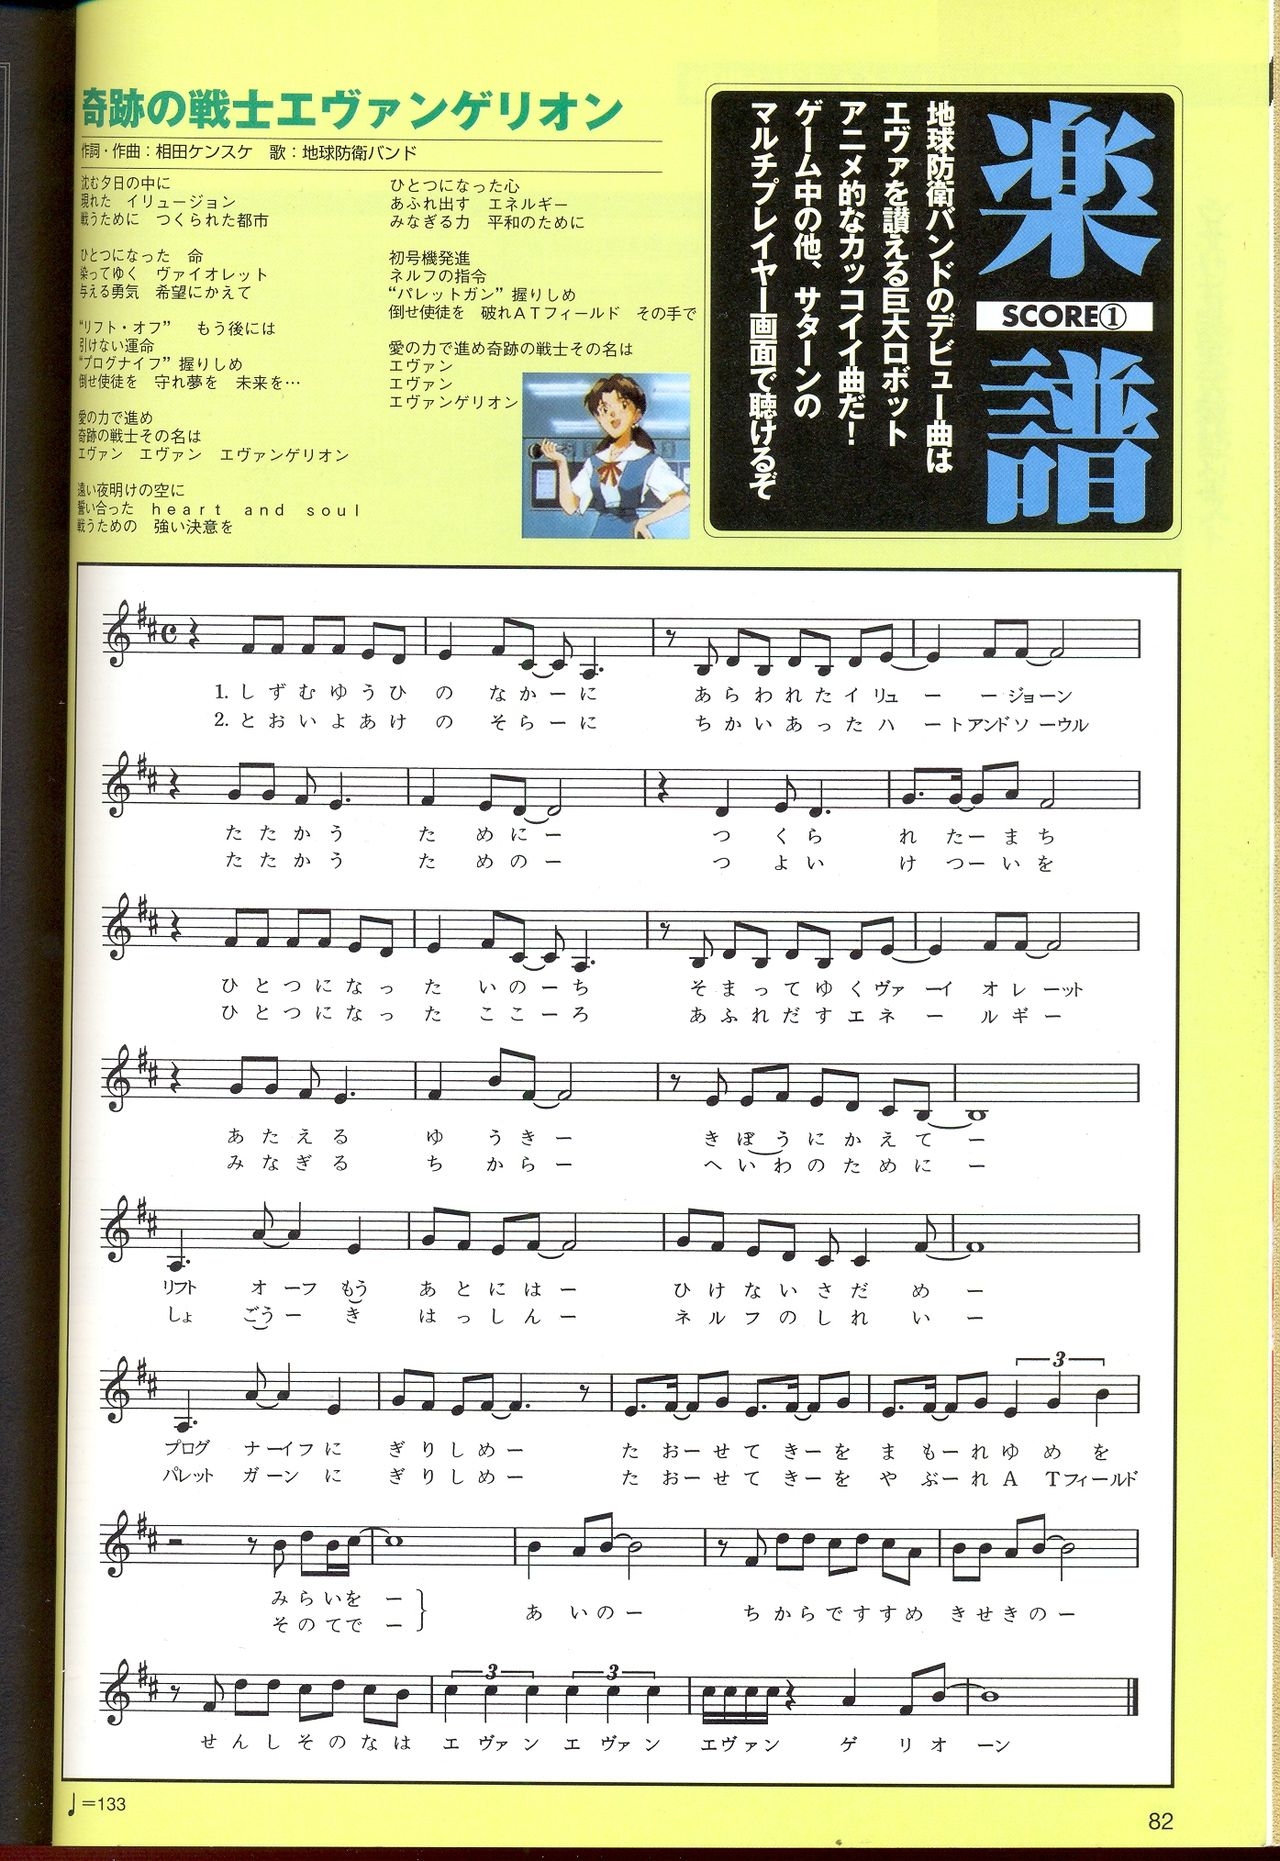 Neon Genesis Evangelion - 2nd Impression Sega Saturn Perfect Guide 81